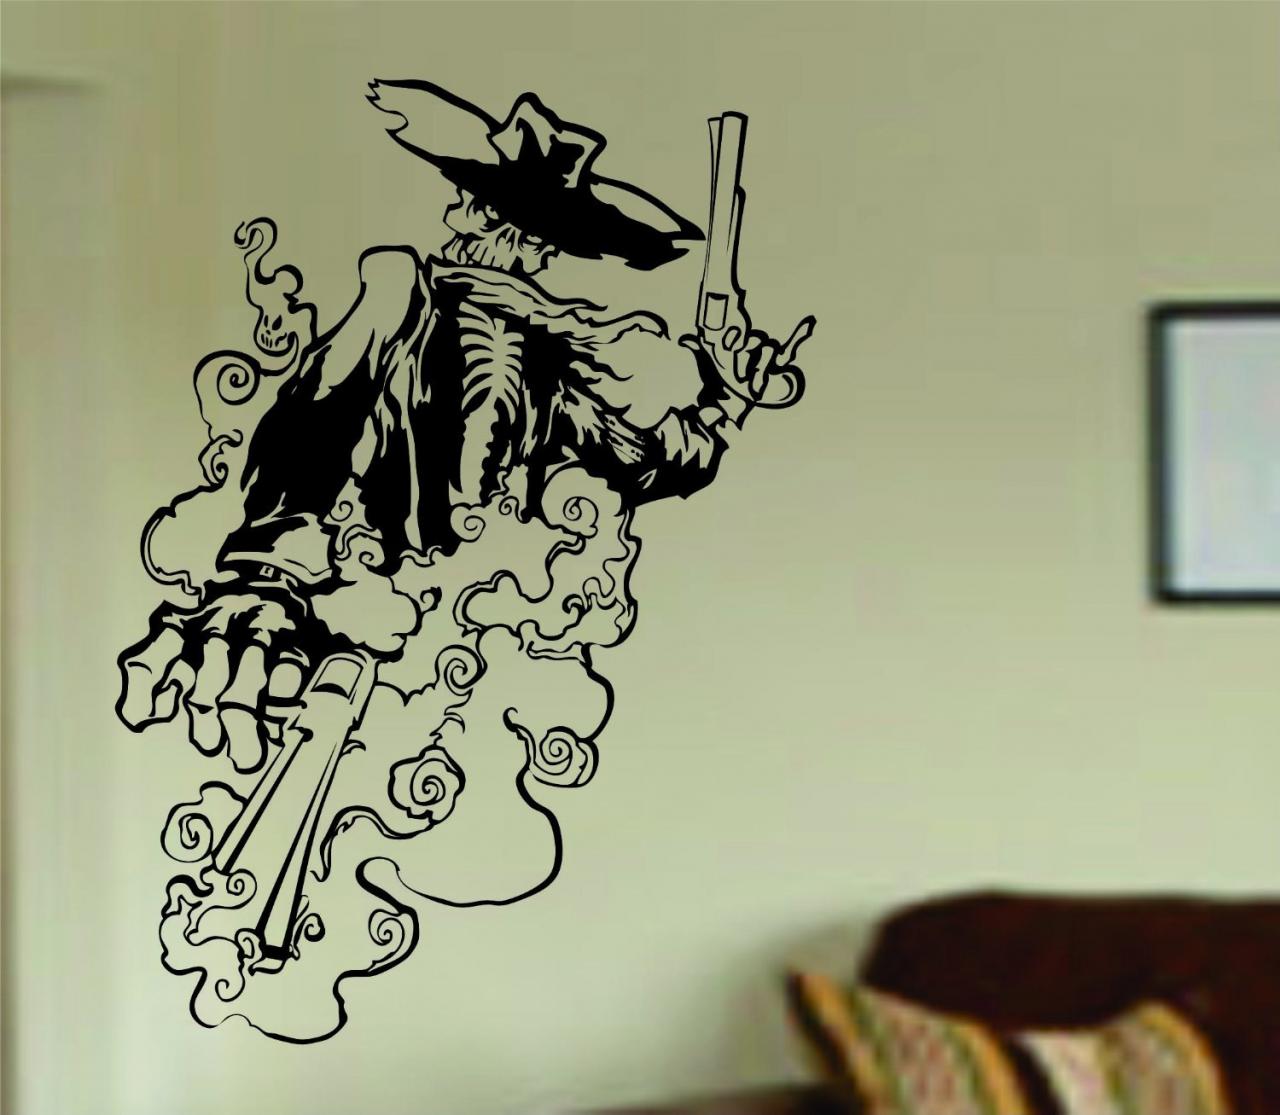 Cowboy Skeleton Wall Vinyl Decal Sticker Art Graphic Sticker Sugar Skull Western Rodeo Cowboys